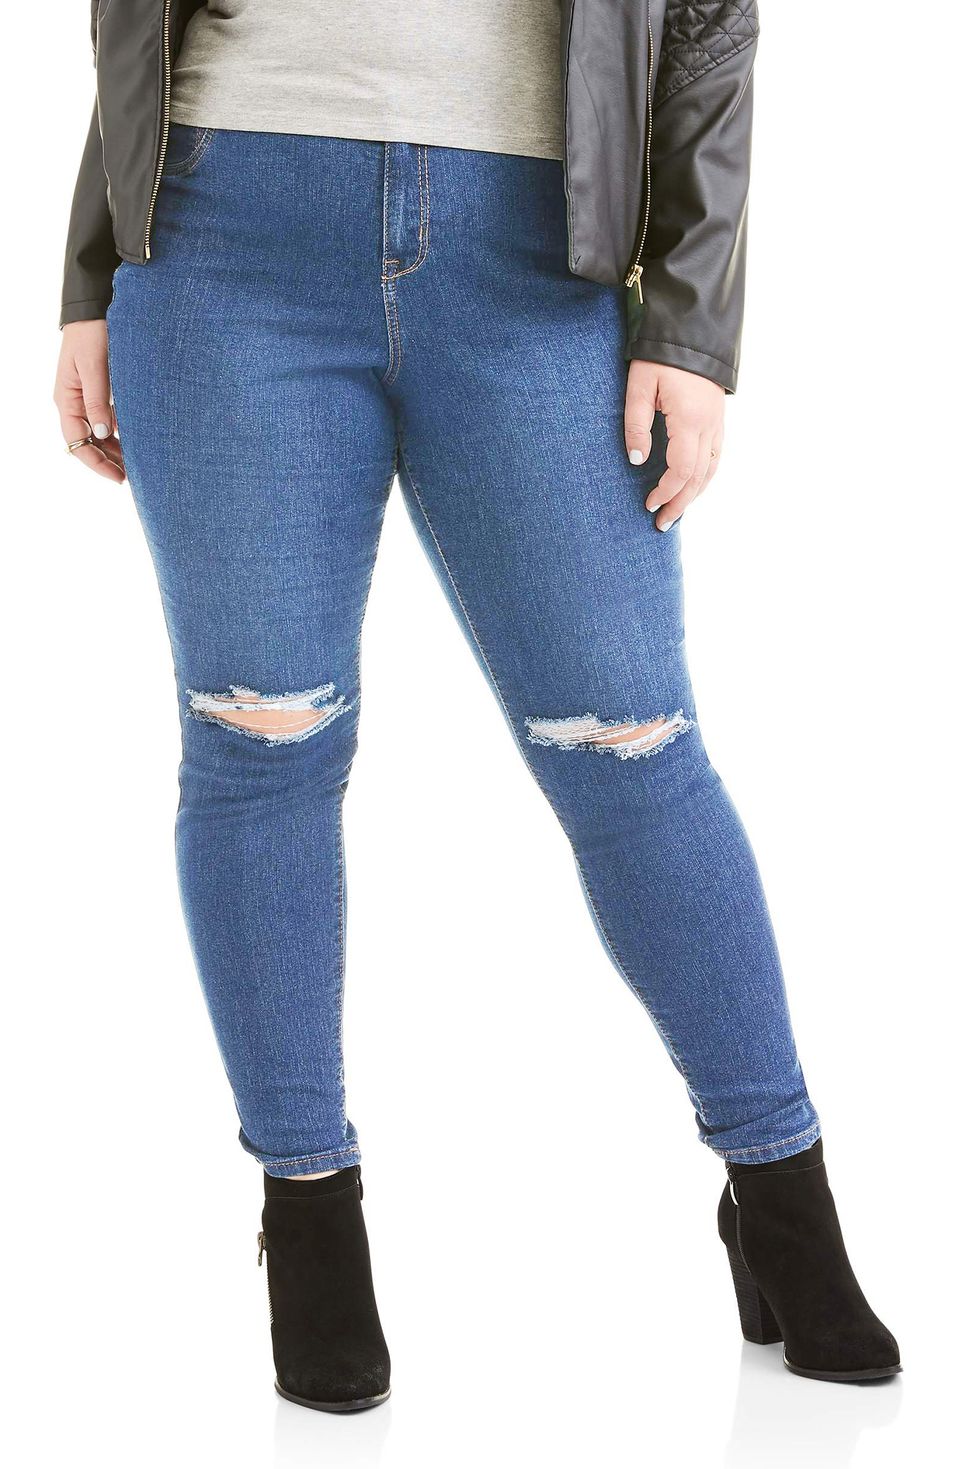  A3 Denim Plus-Size Destructed Skinny Jeans